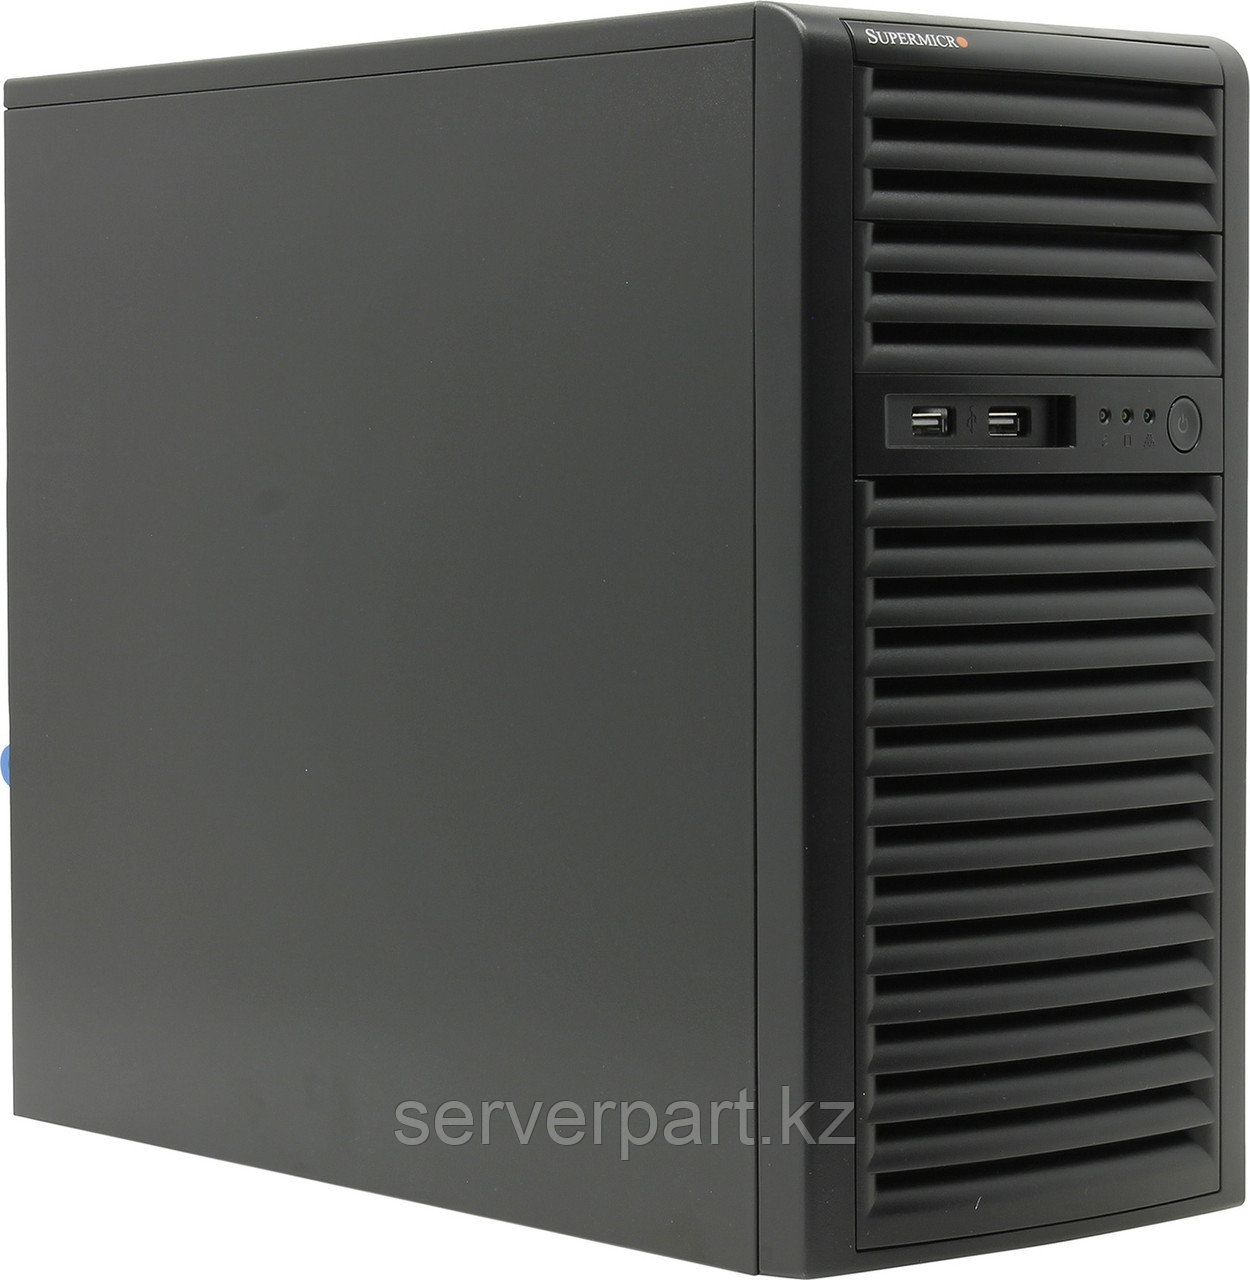 Сервер Supermicro SYS-5039D Tower/4-core intel xeon E3-1220v6 3GHz/64GB UDIMM nECC/1x240GB SSD RI Hyb, фото 1